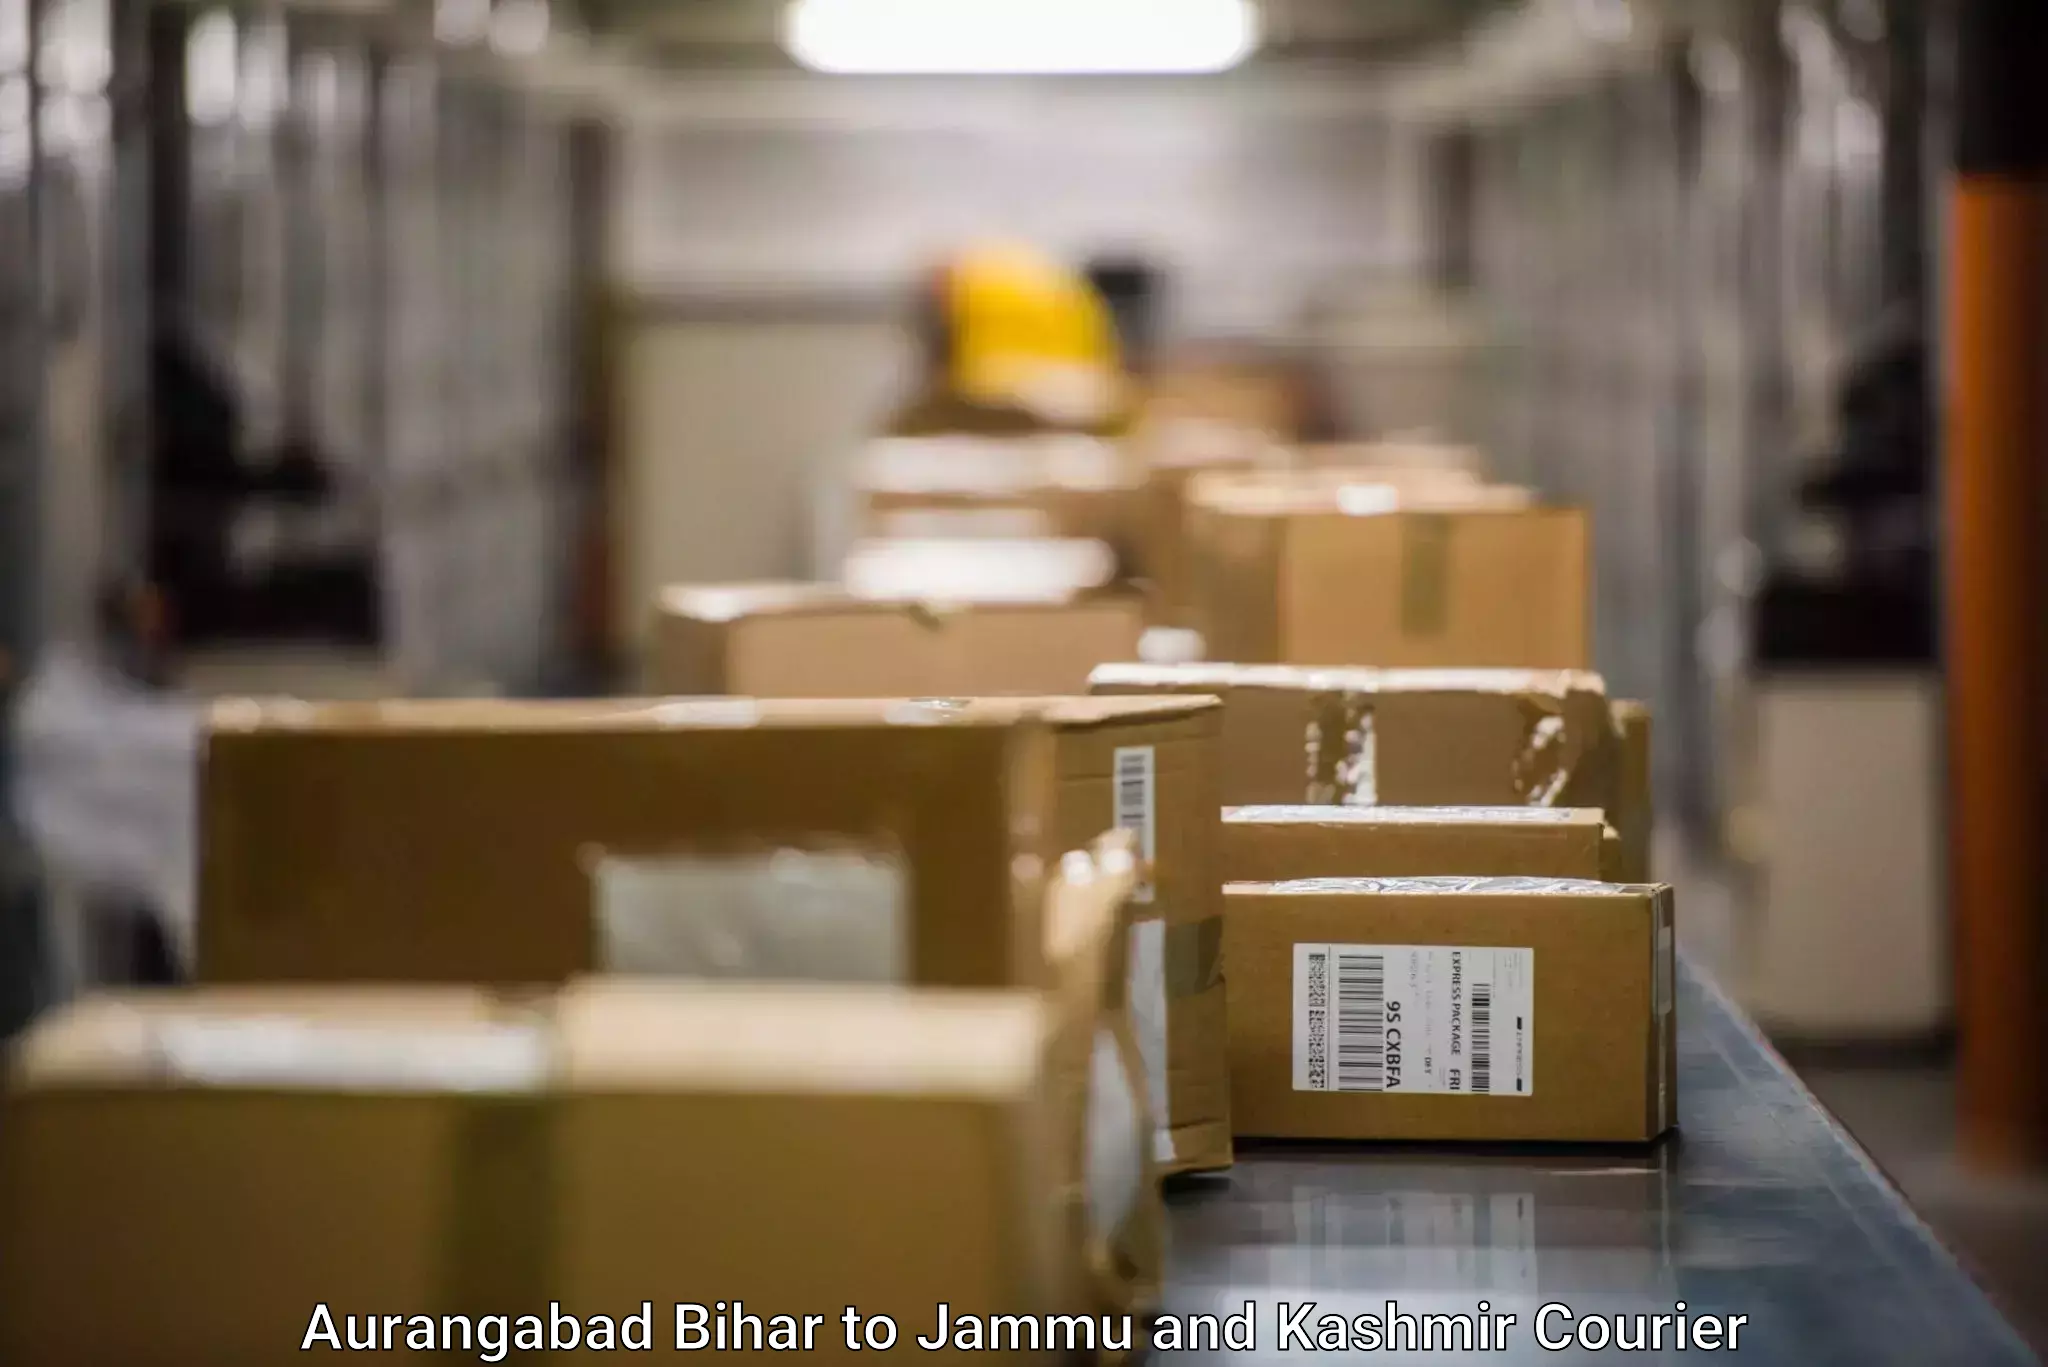 Reliable shipping partners Aurangabad Bihar to Jammu and Kashmir